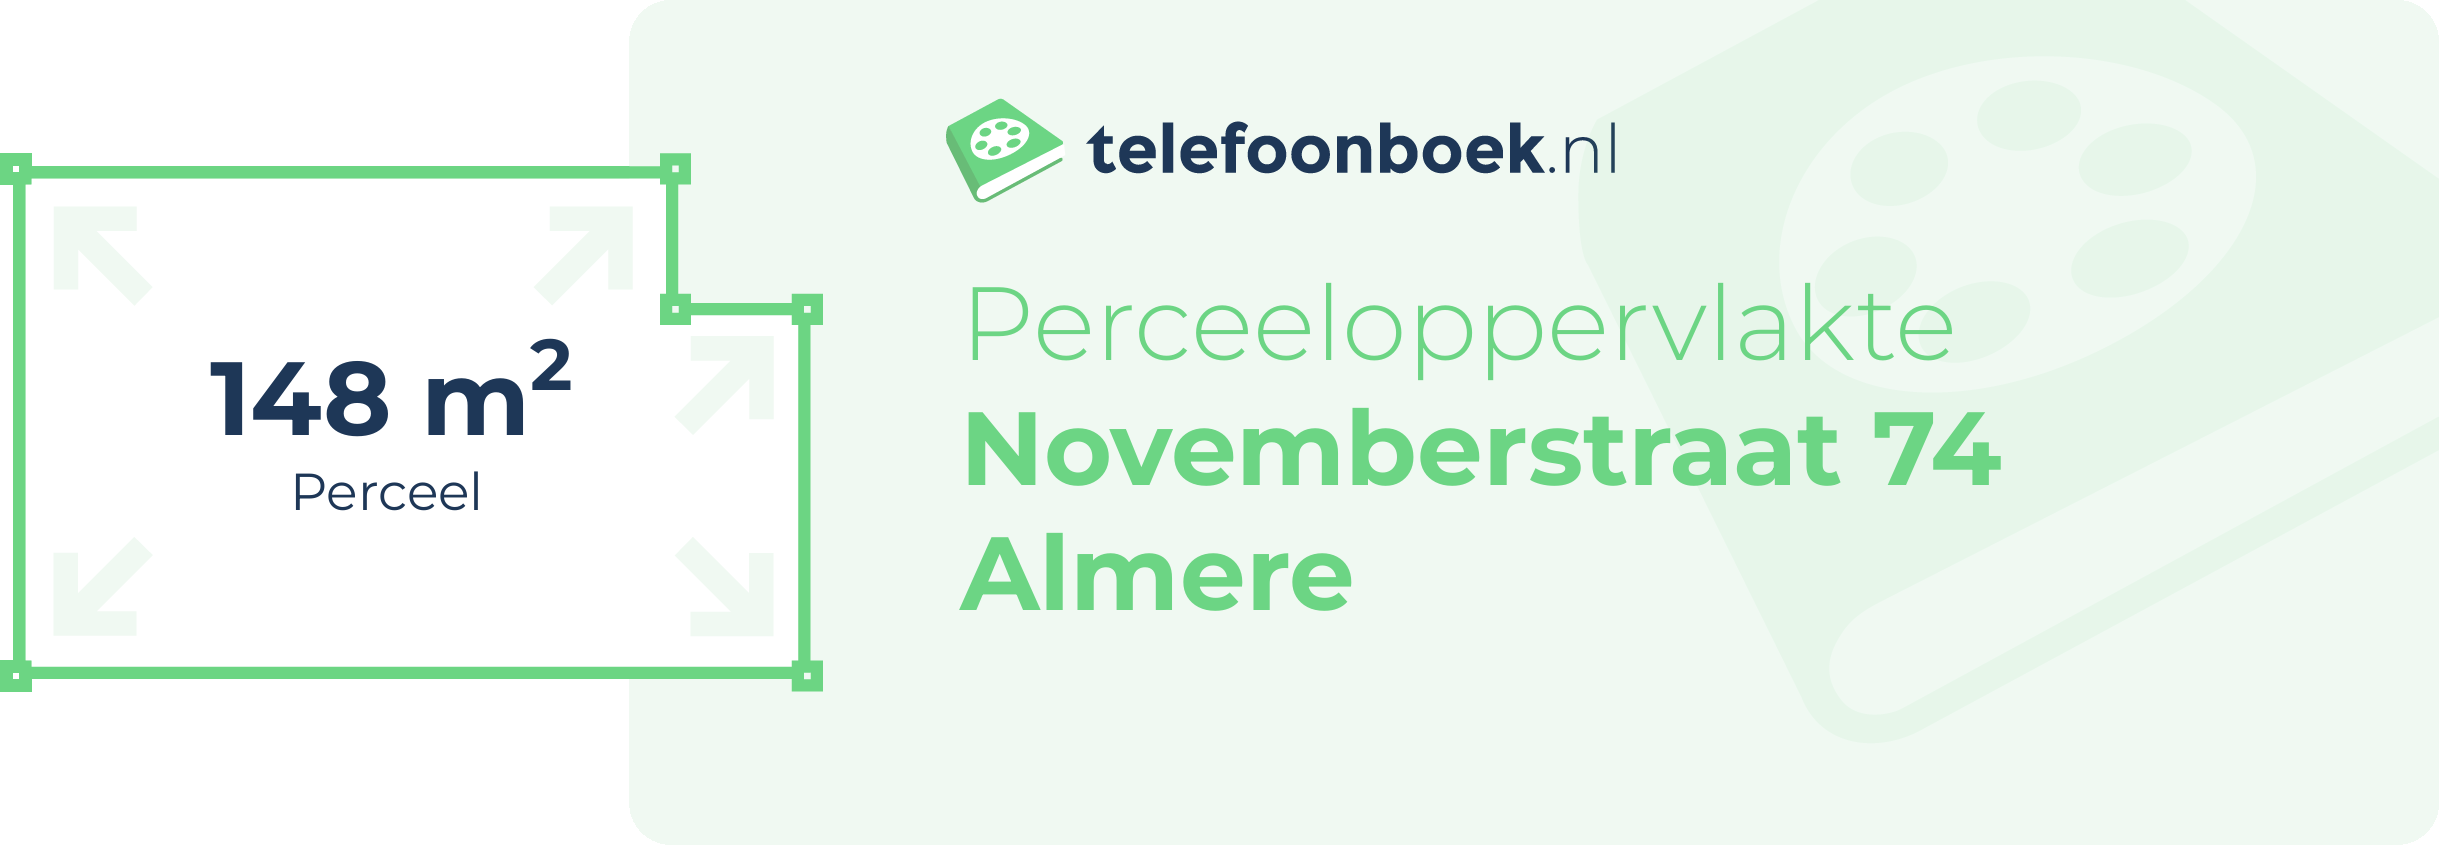 Perceeloppervlakte Novemberstraat 74 Almere